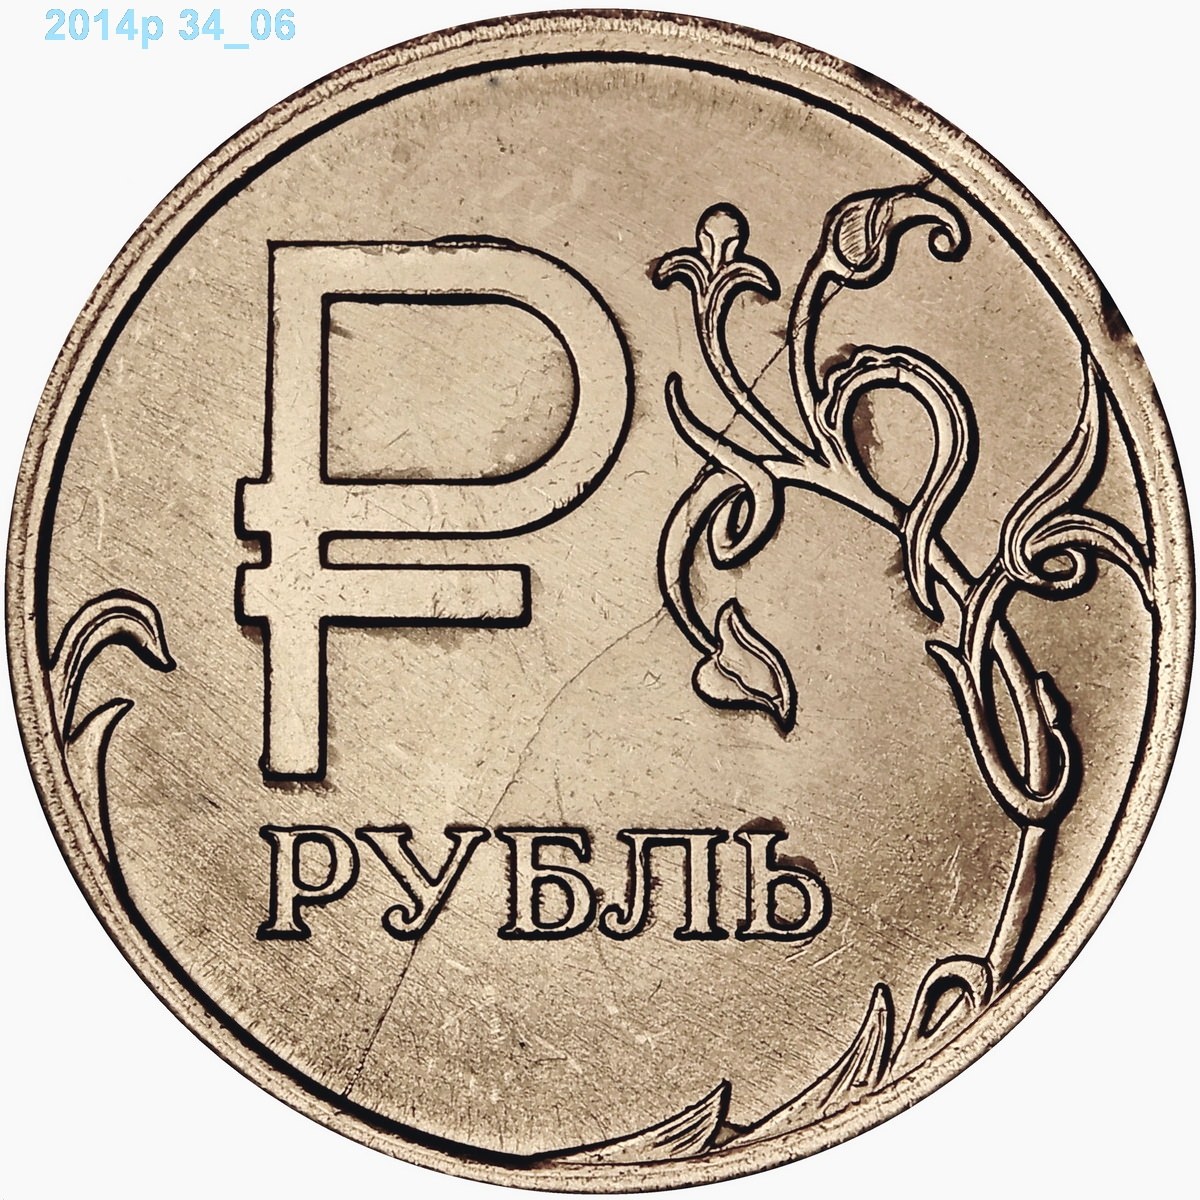 Значок рубля текст. Символ рубля. Логотип рубля. Монеты рубли. Денежный знак рубля.